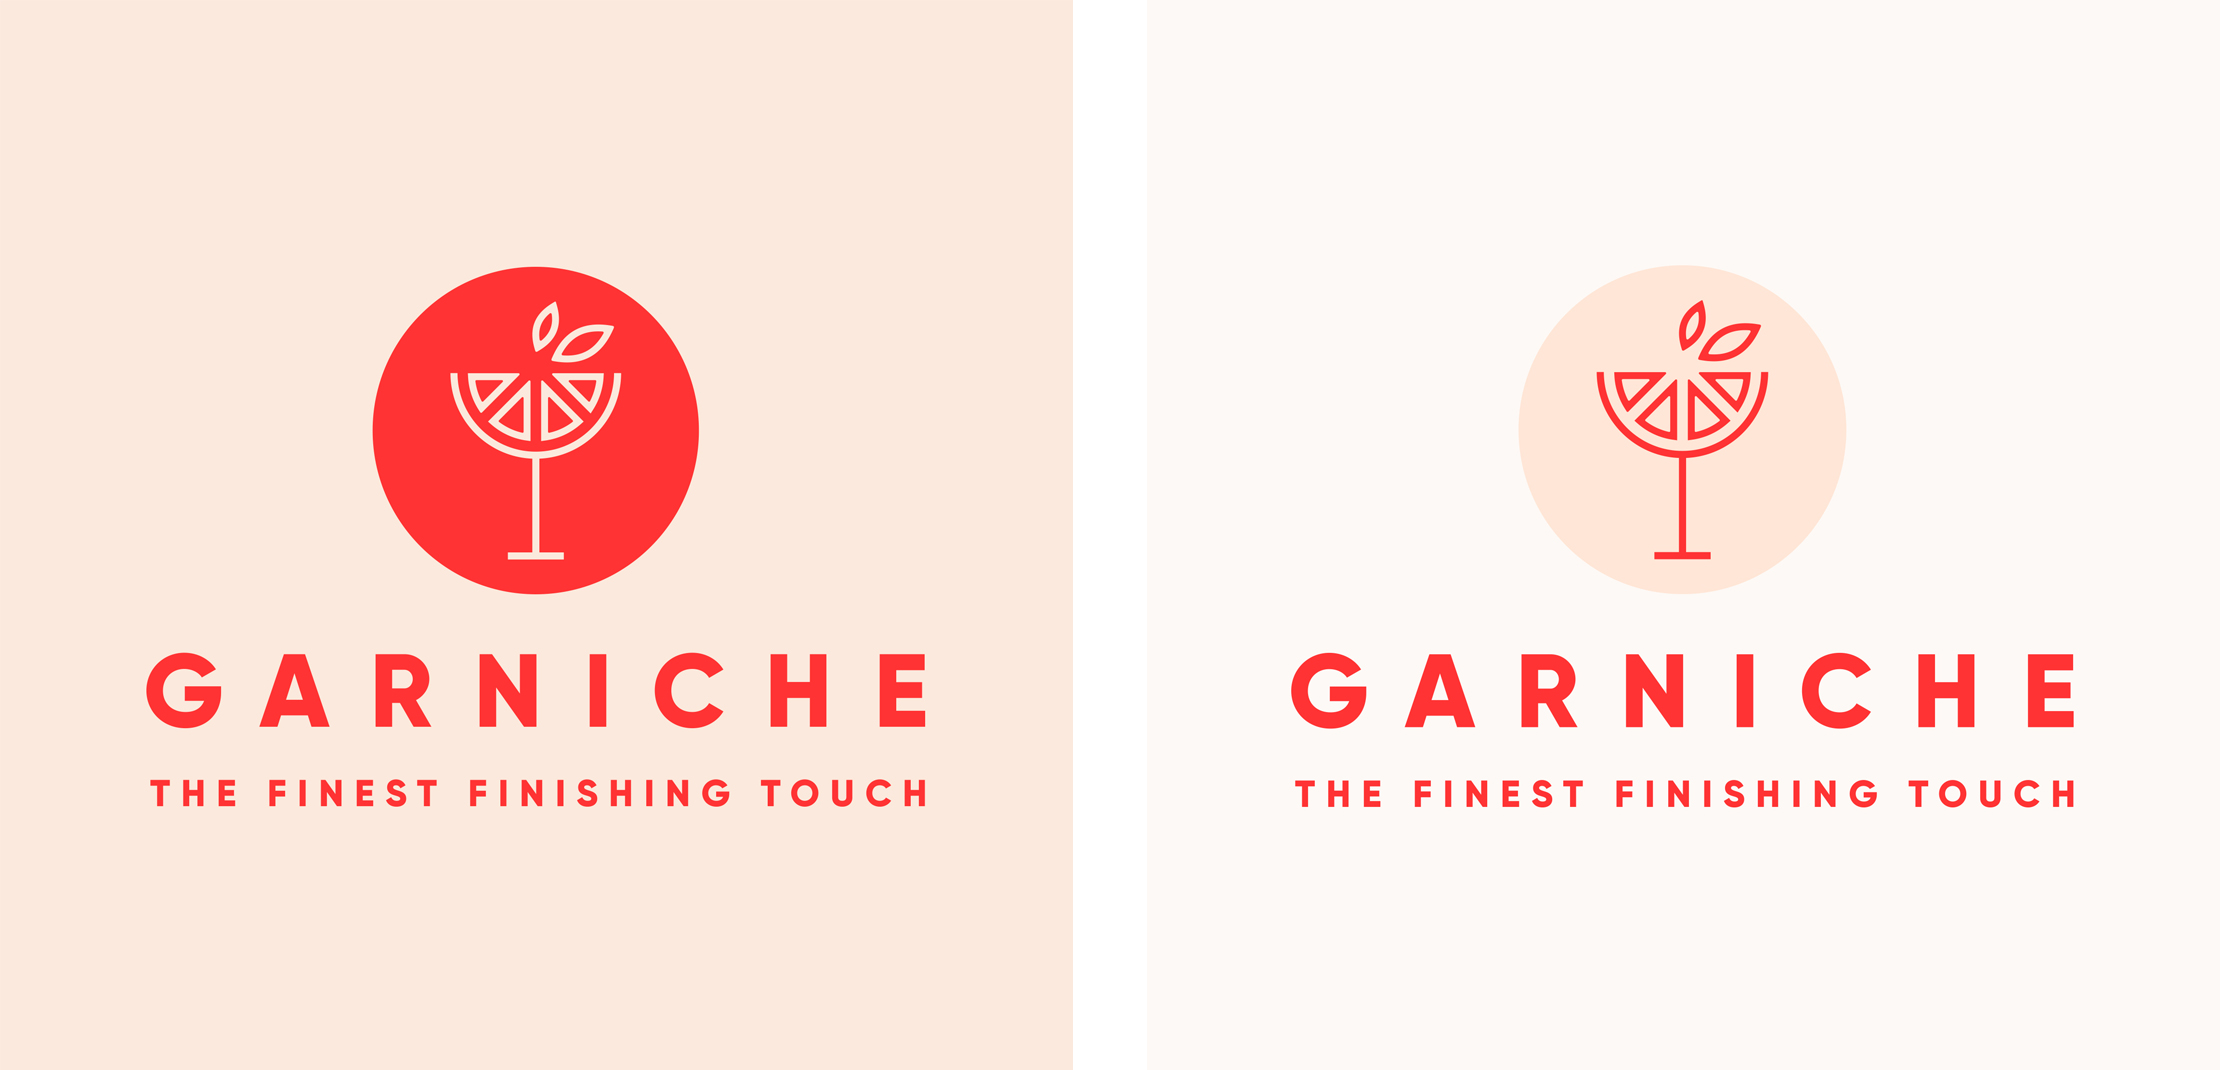 Creative Energy - Garniche Logos